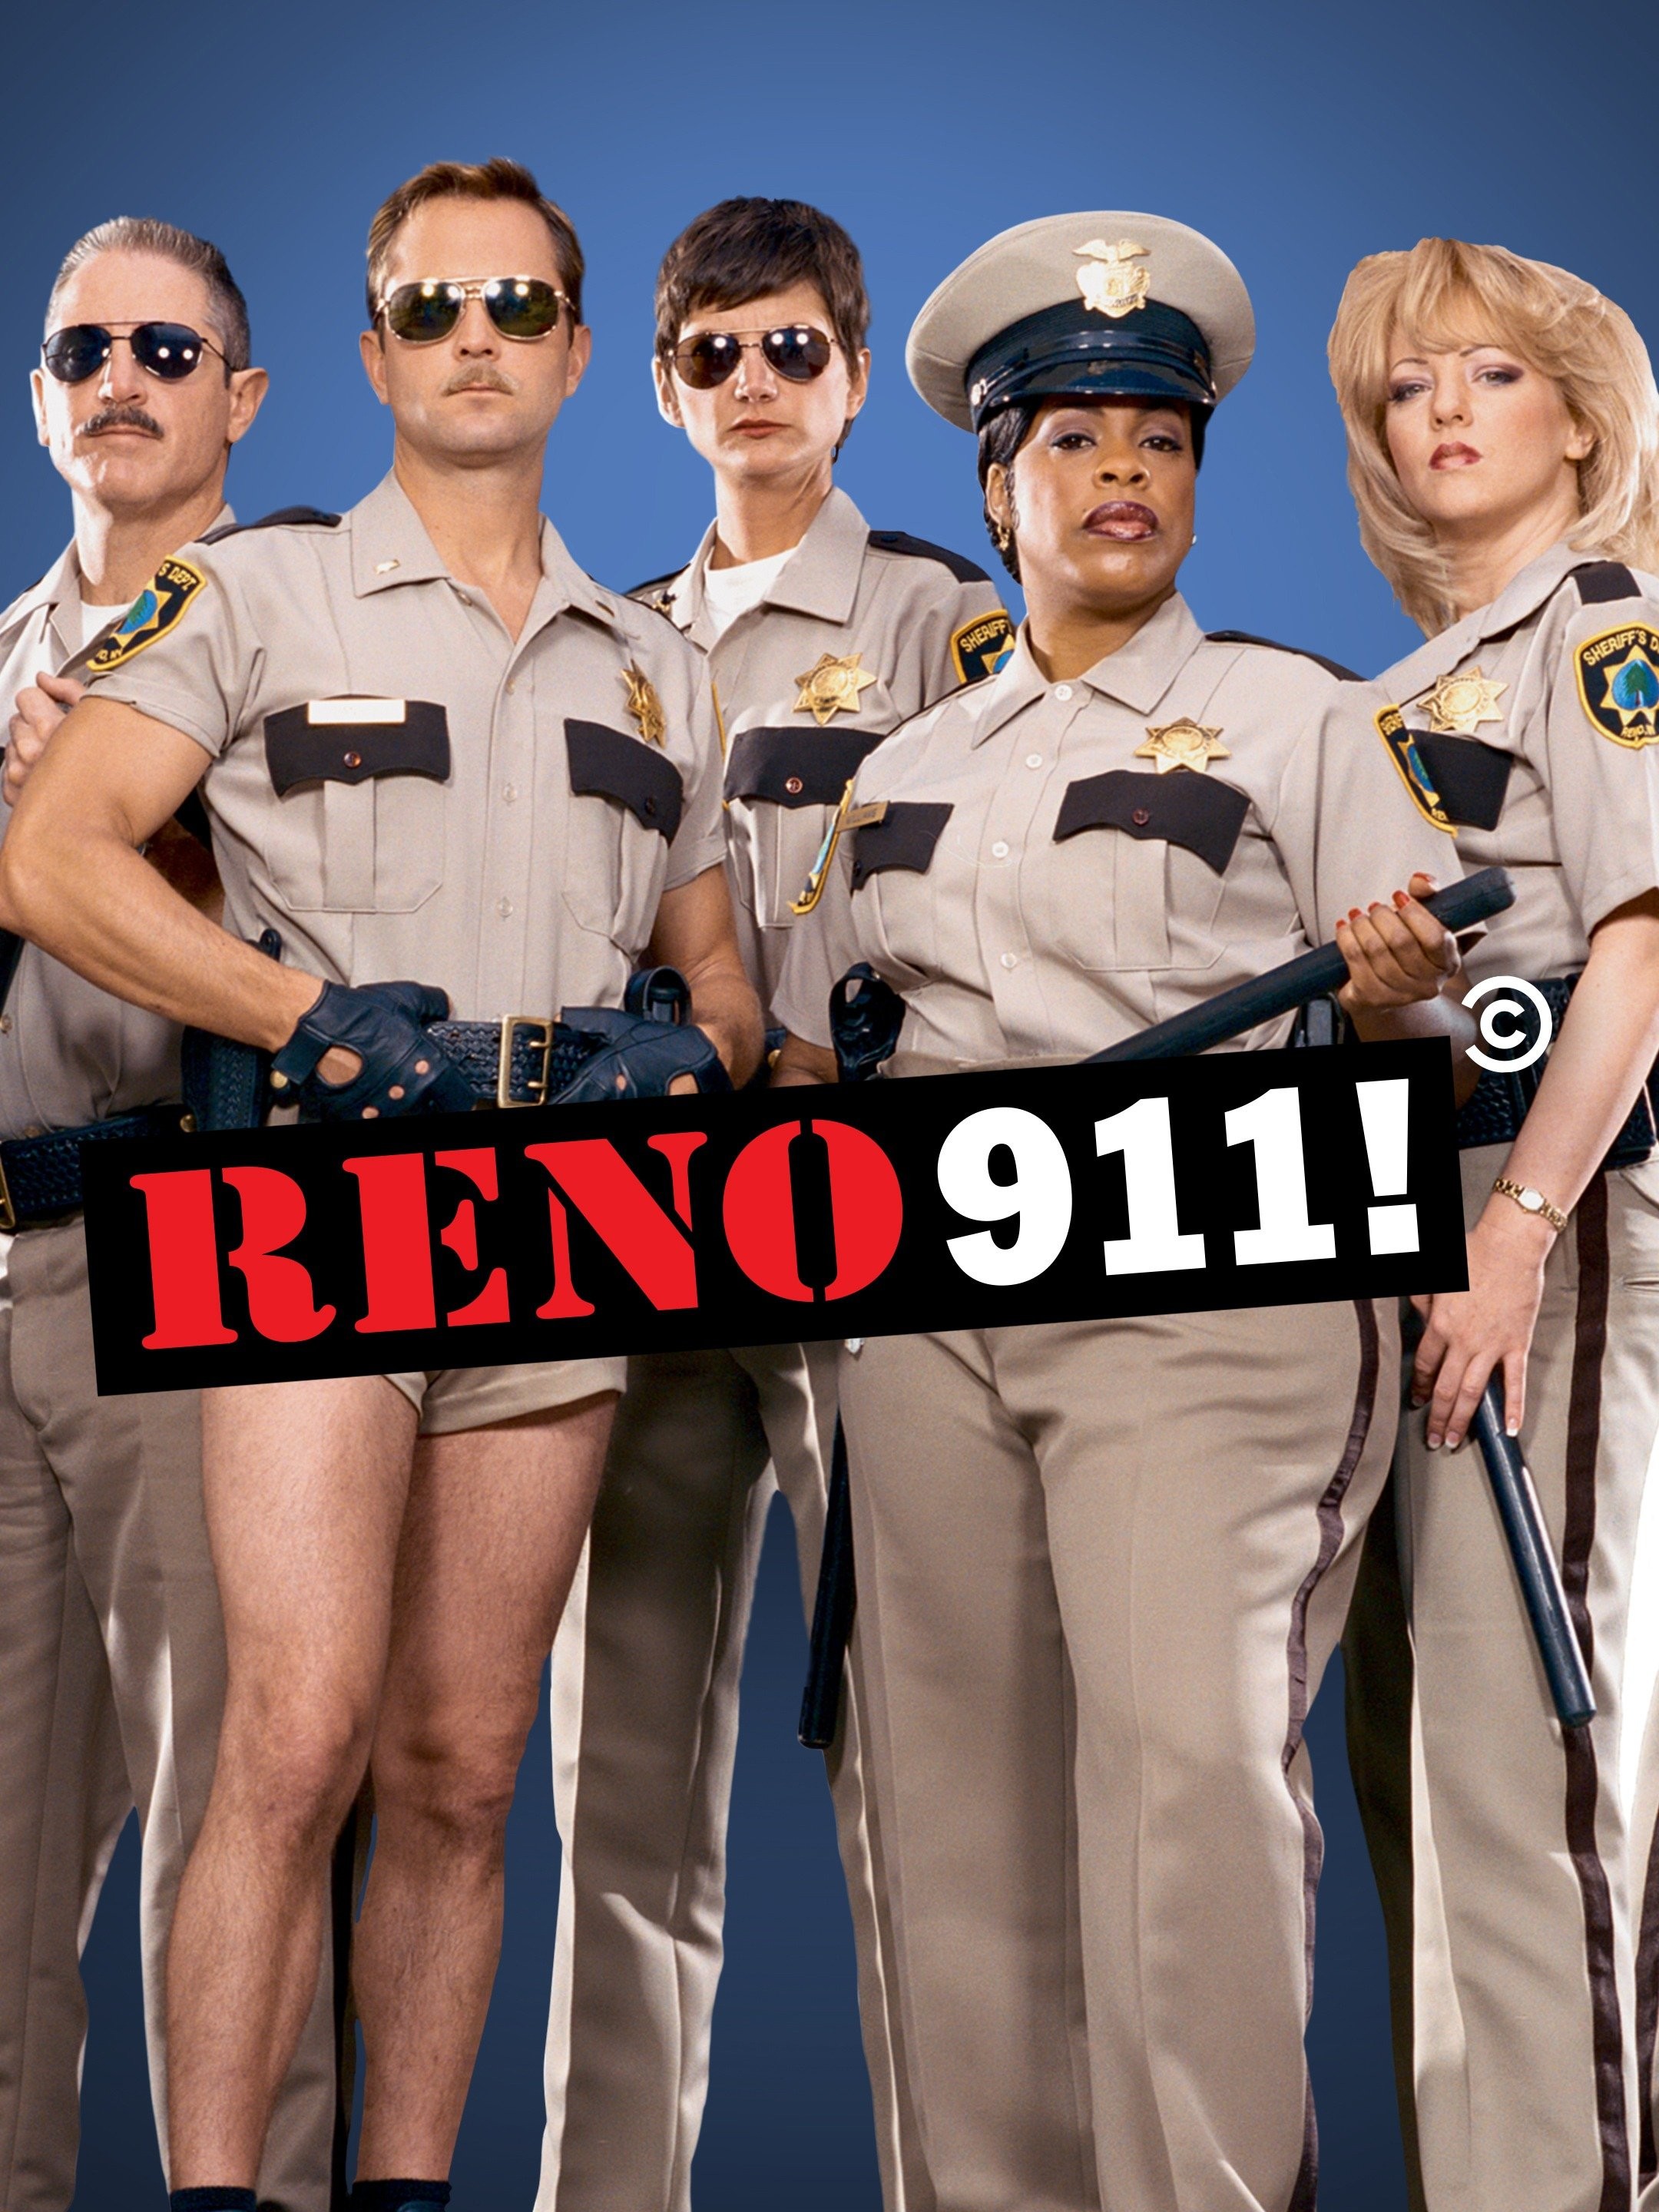 RENO 911! - TV Series